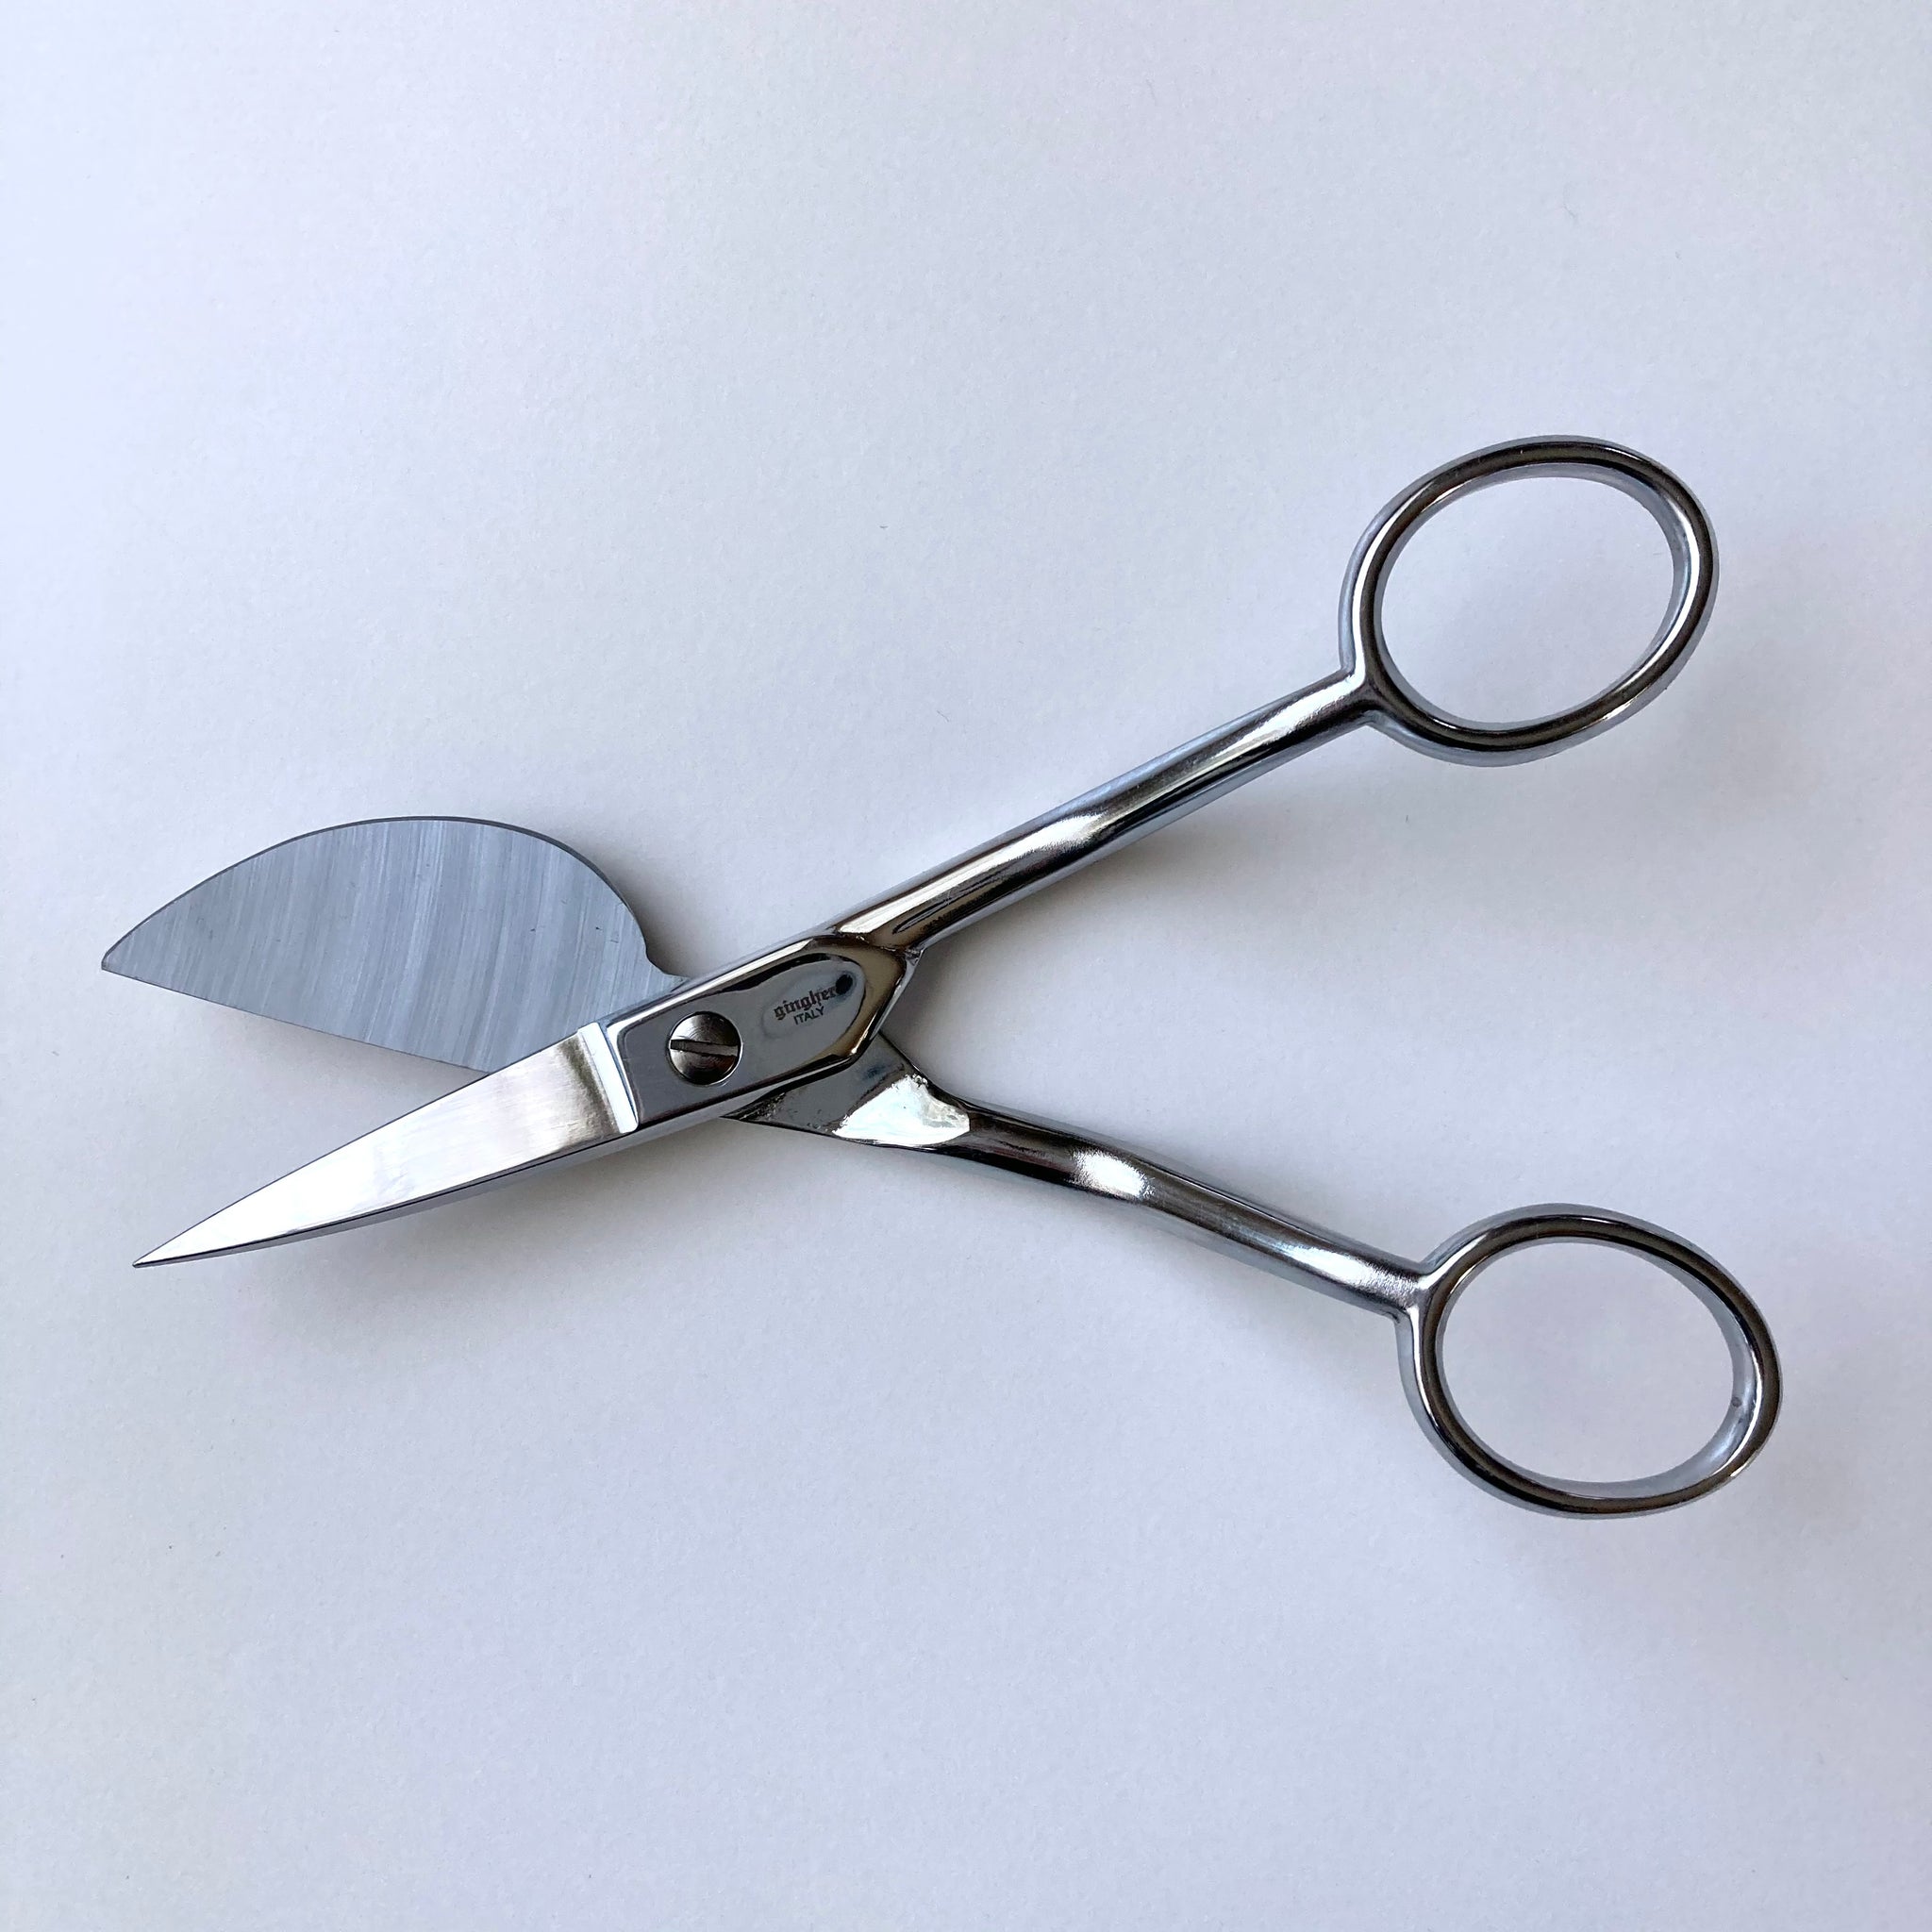 Gingher 6 Knife Edge Applique Scissors